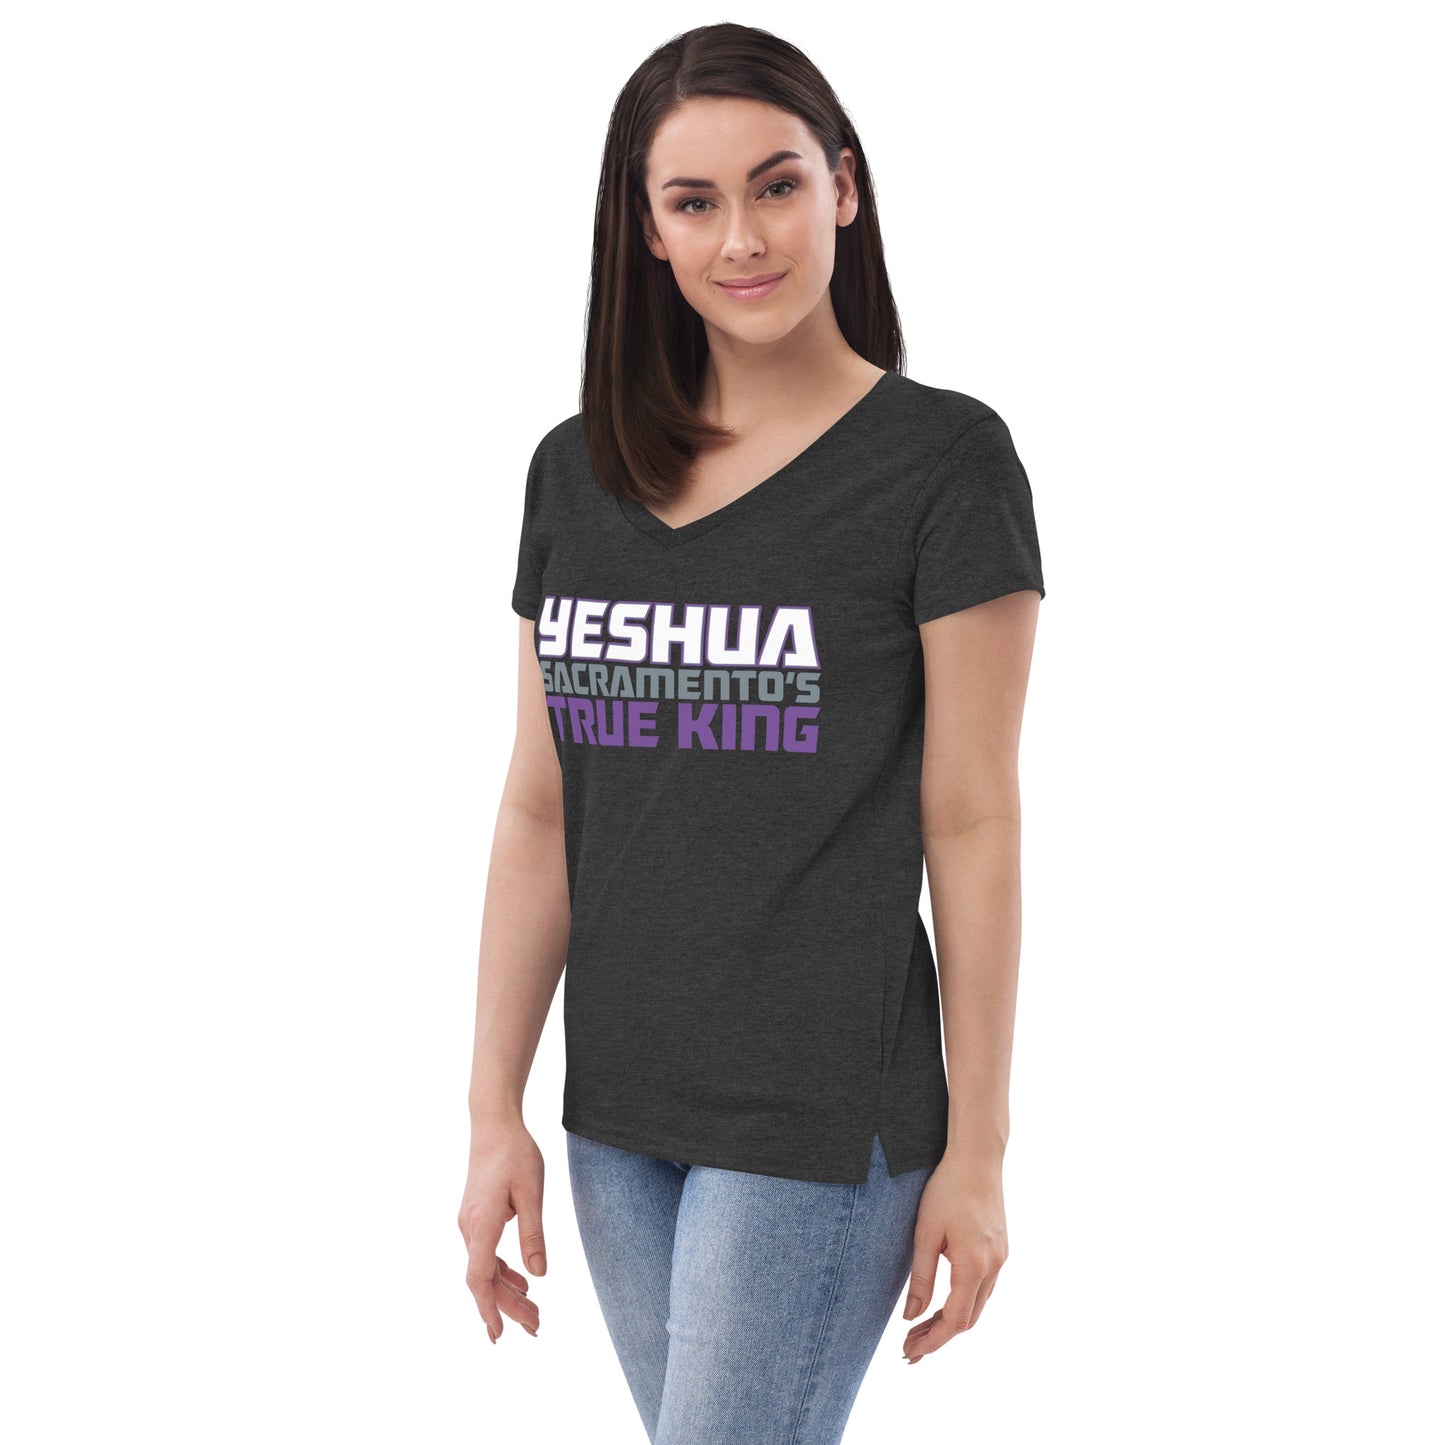 Yeshua Sacramento's True King - Women's V-neck t-shirt